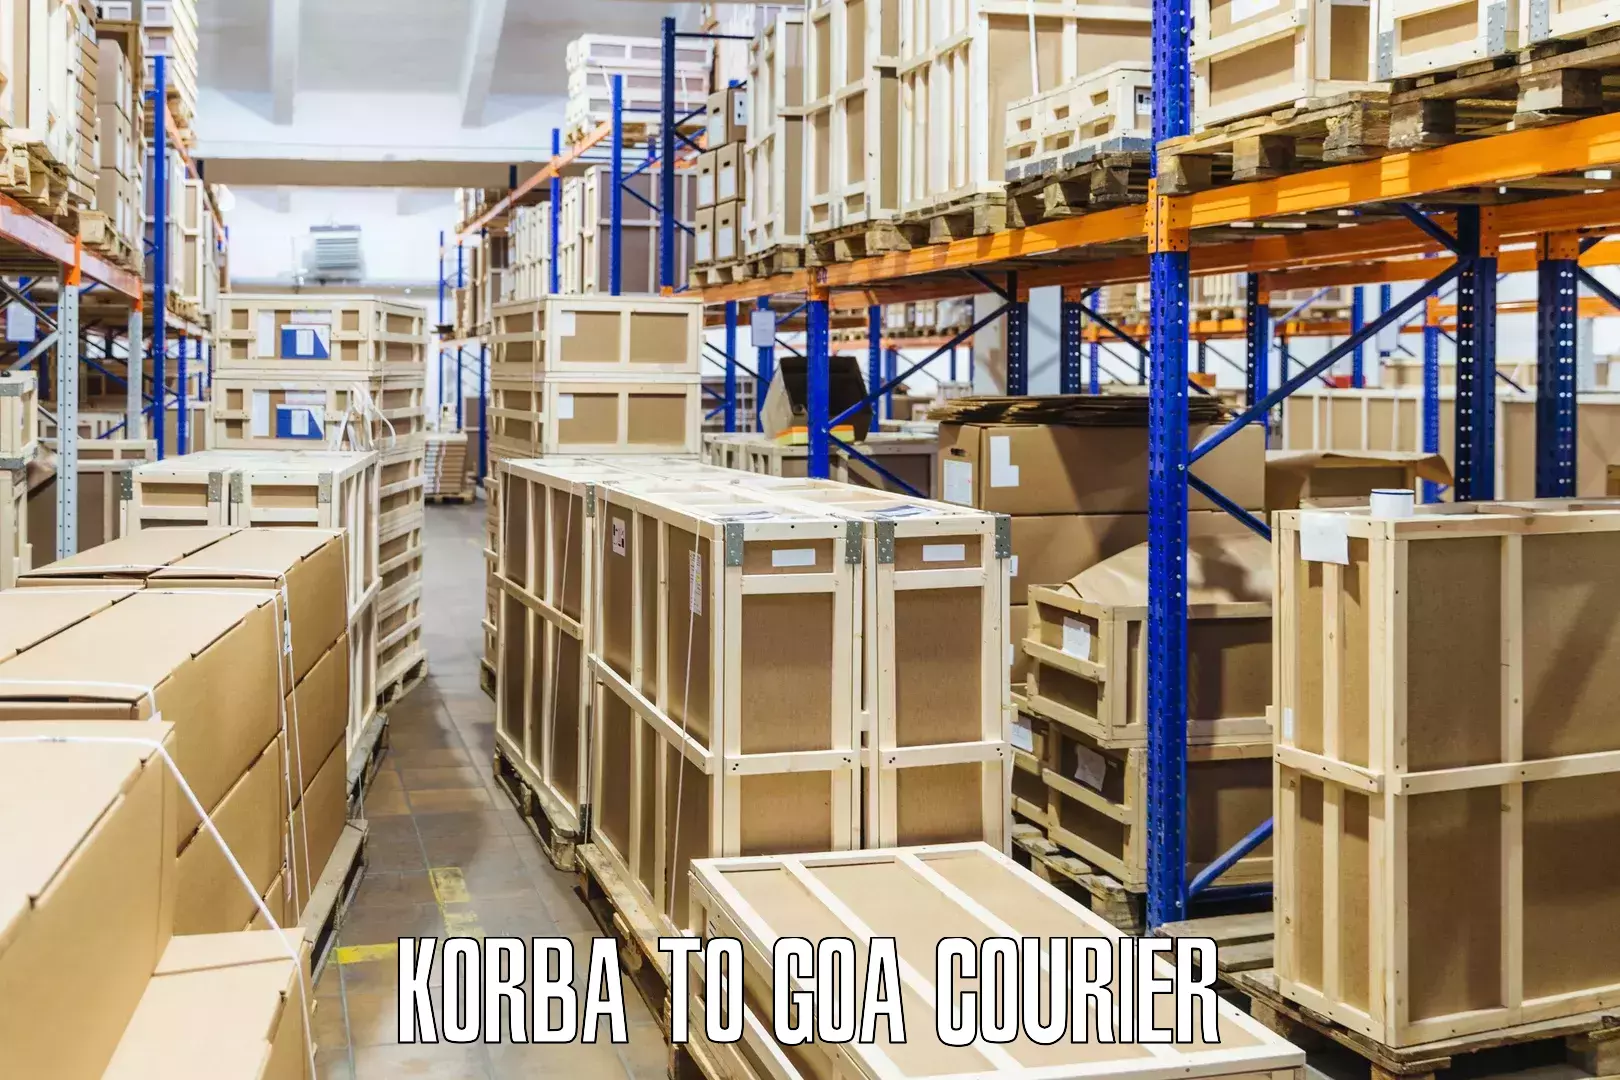 Courier service partnerships Korba to South Goa